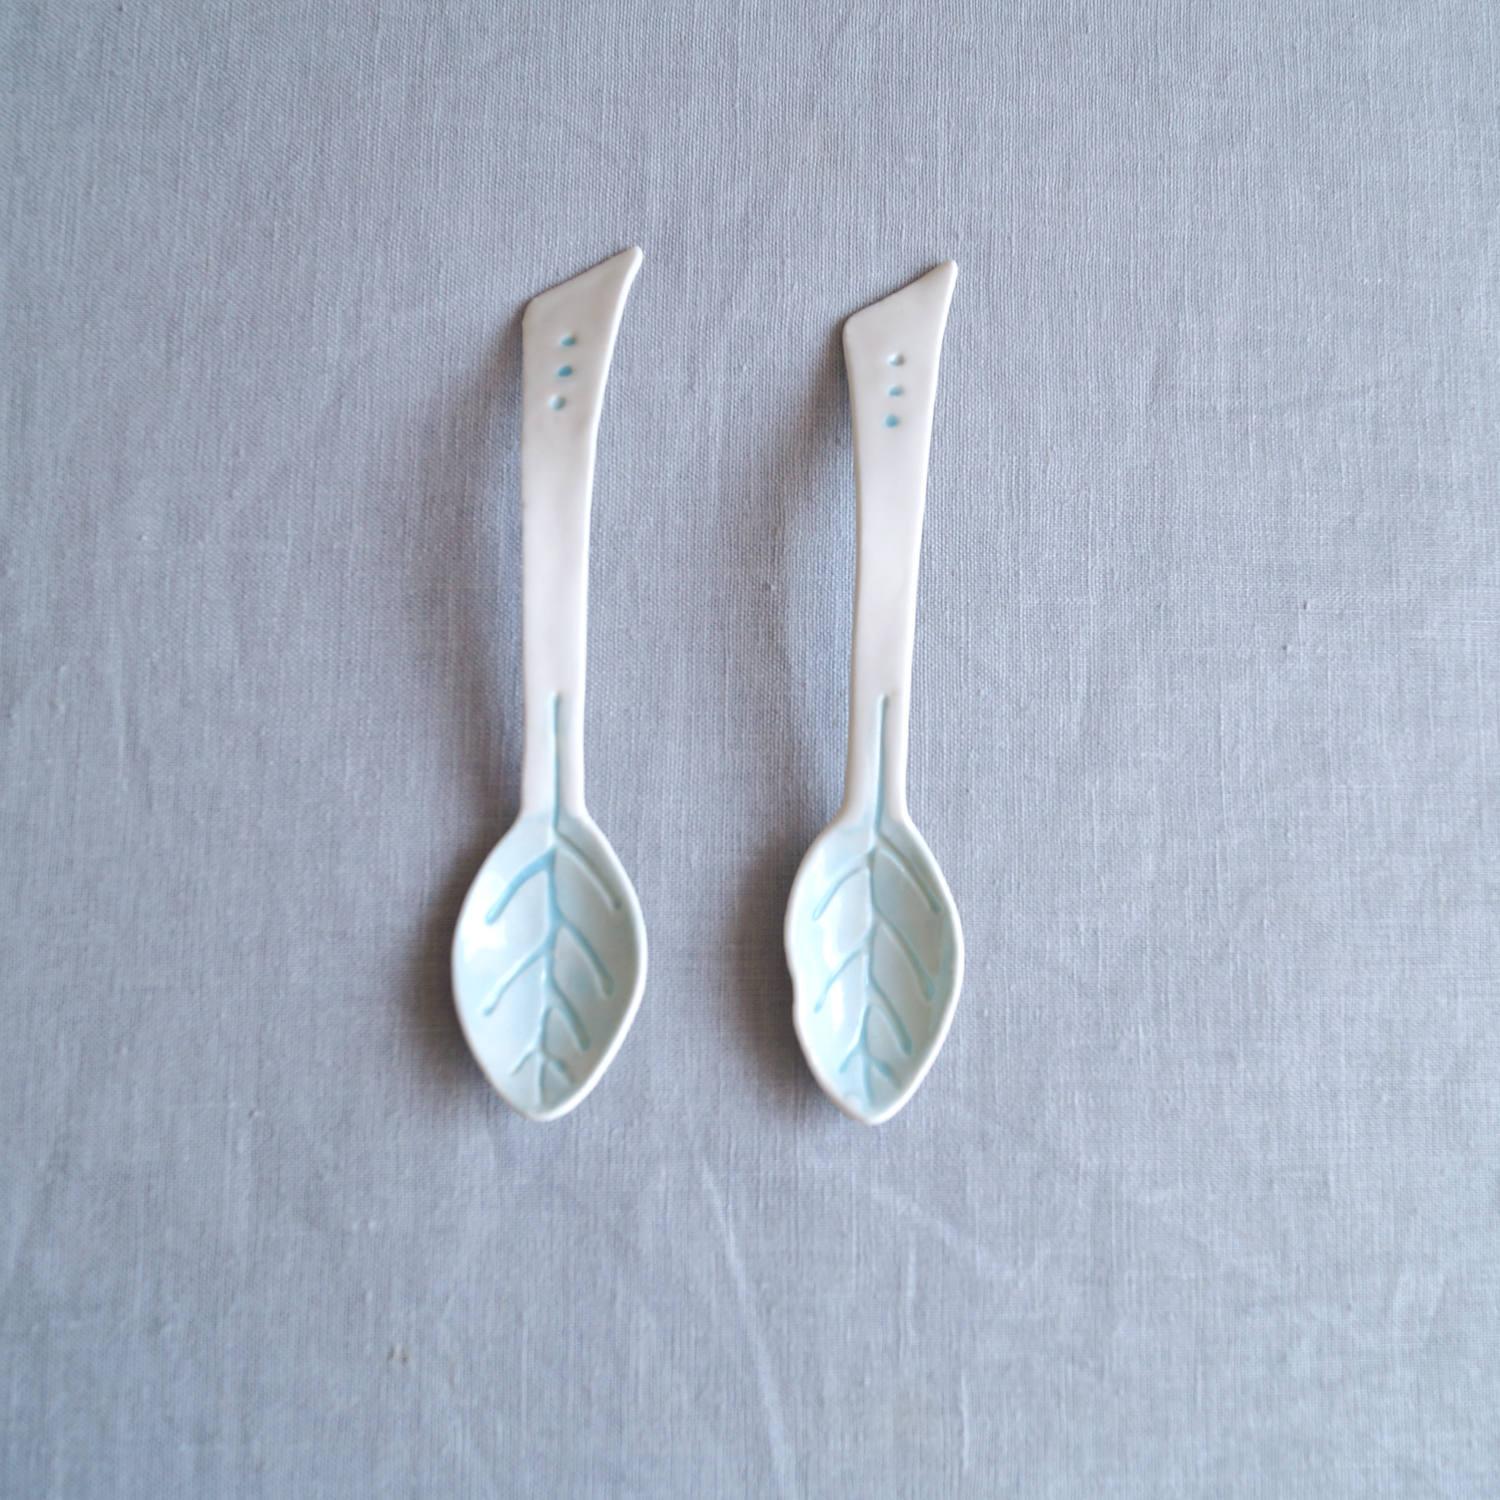 Ceramic, LEAF, collectable spoon, white porcelain, celadon blue, Vanillakiln, UK, leaf texture, blue white, ceramic spoon,